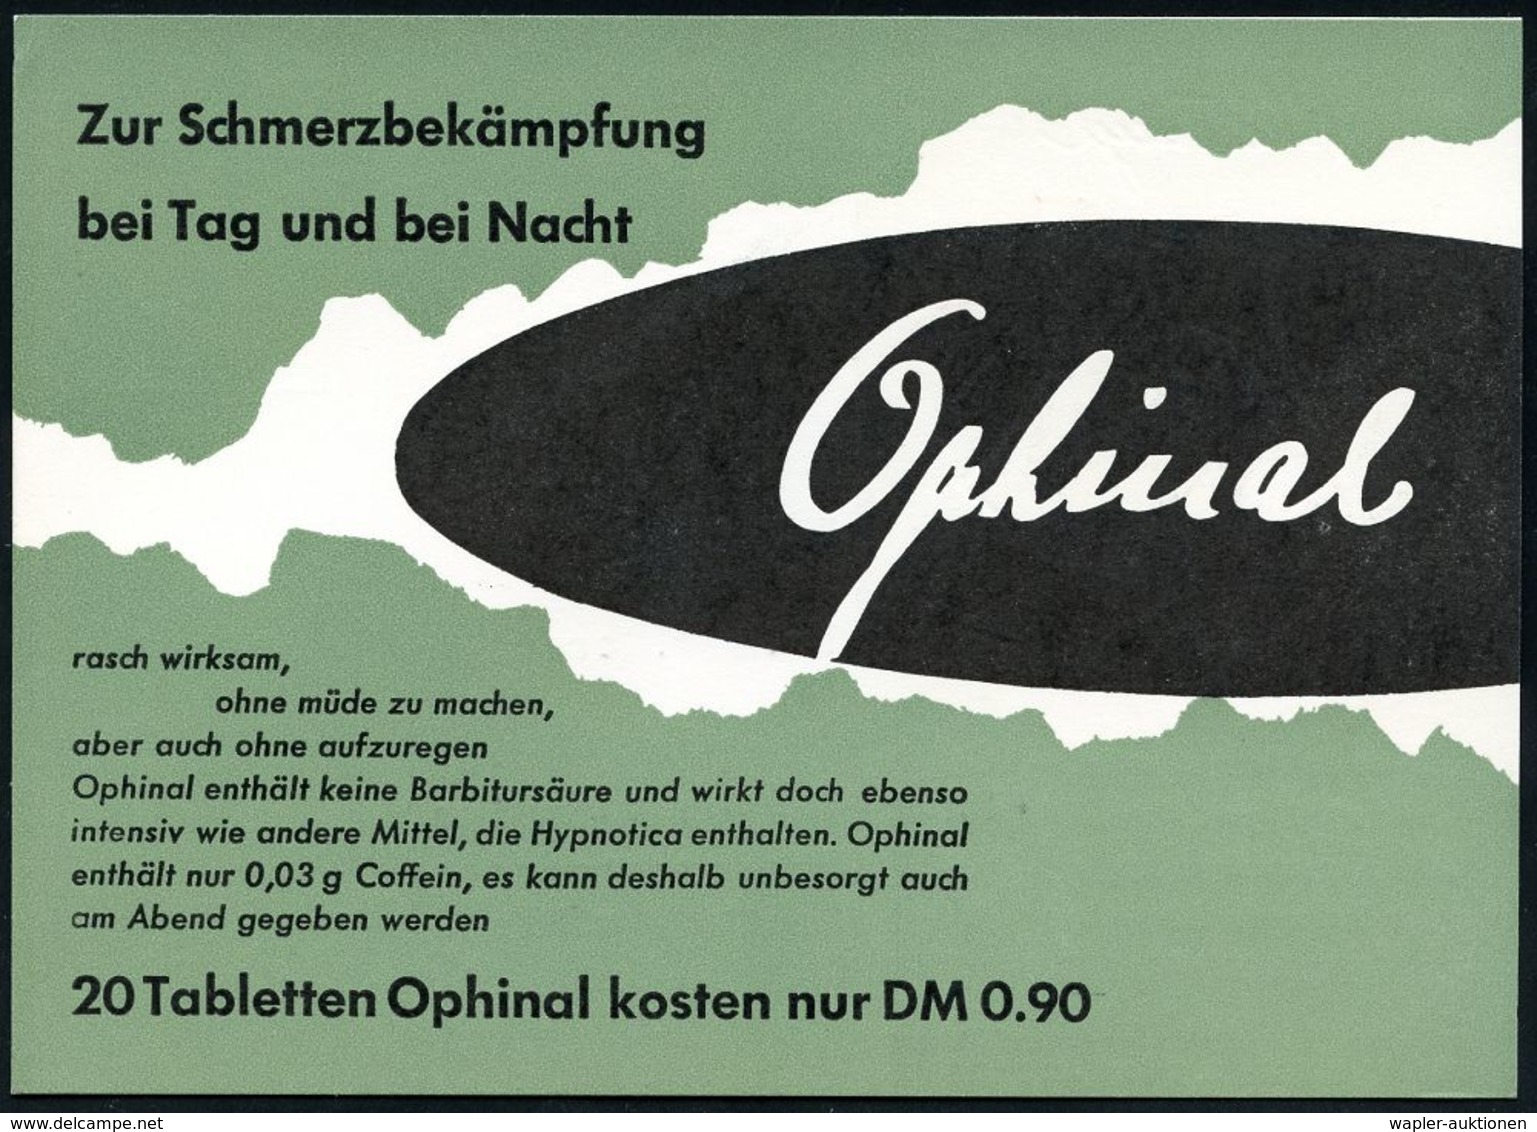 PHARMAZIE / MEDIKAMENTE : KÖLN-MÜLHEIM 1/ TROPON 1953 (7.7.) AFS (Firmen-Logo: Rotes Kreuz) Auf Zweifarbiger Reklame-Kt. - Pharmacy